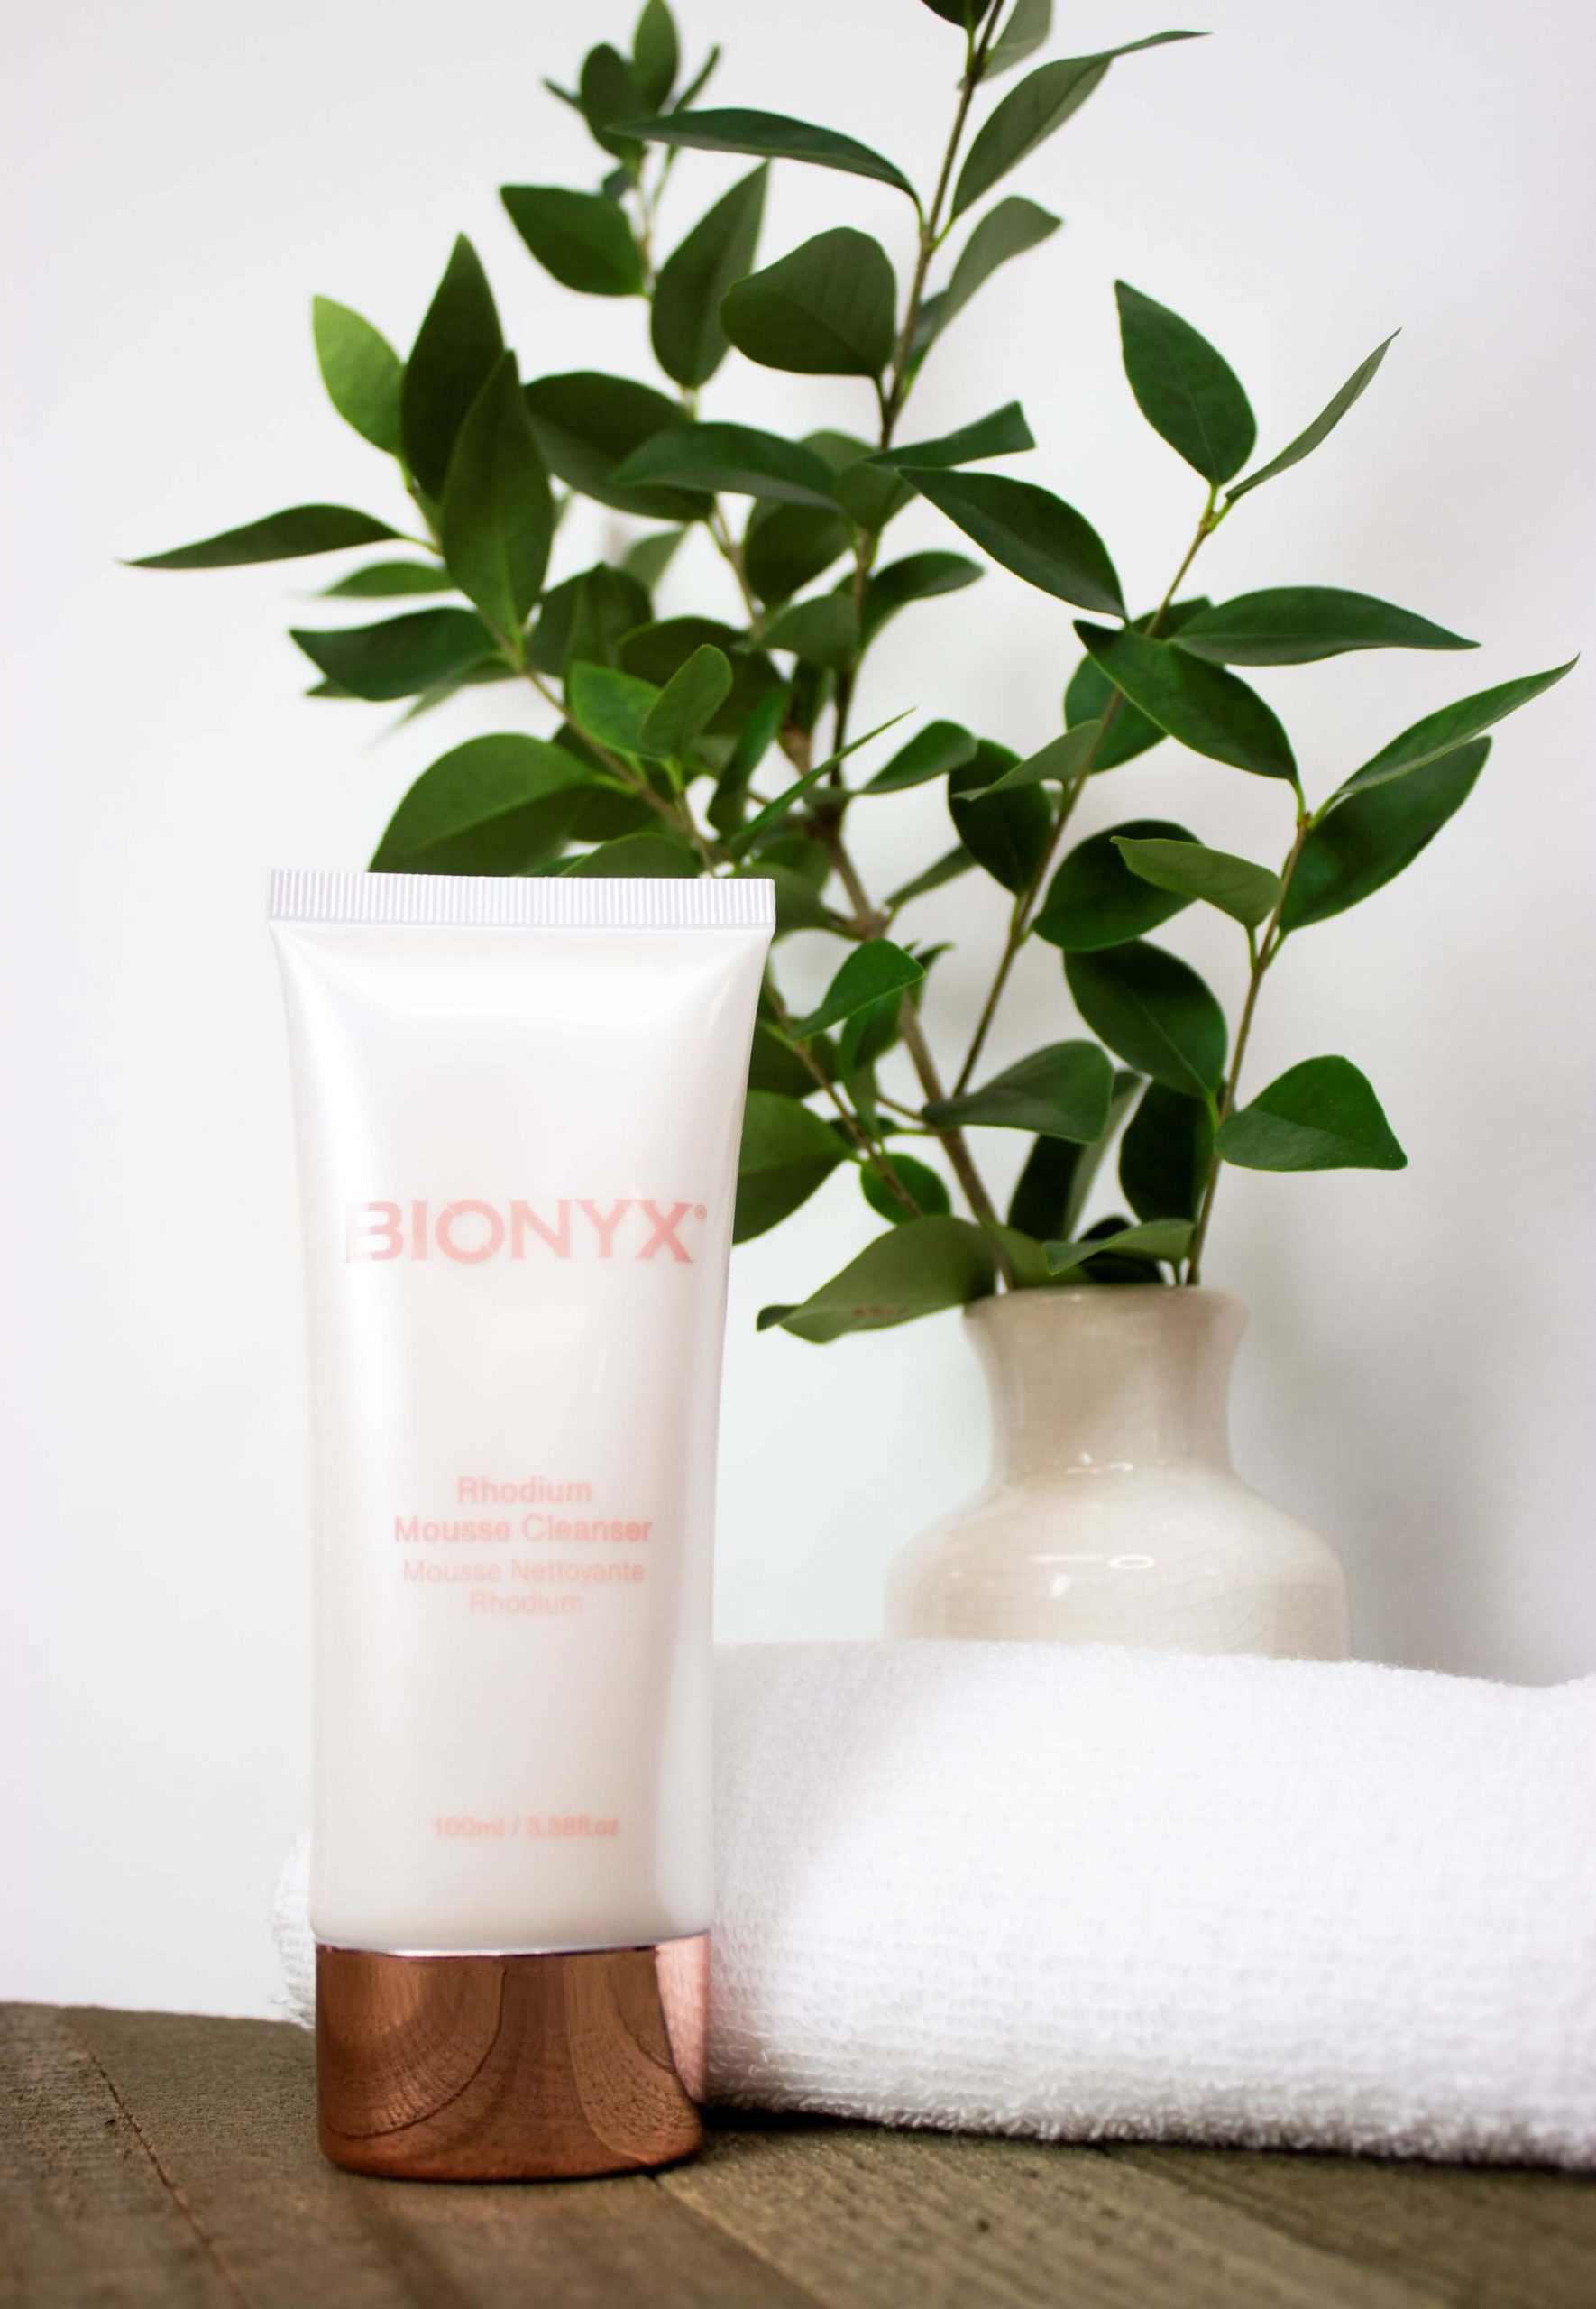 bionyx mousse cleanser